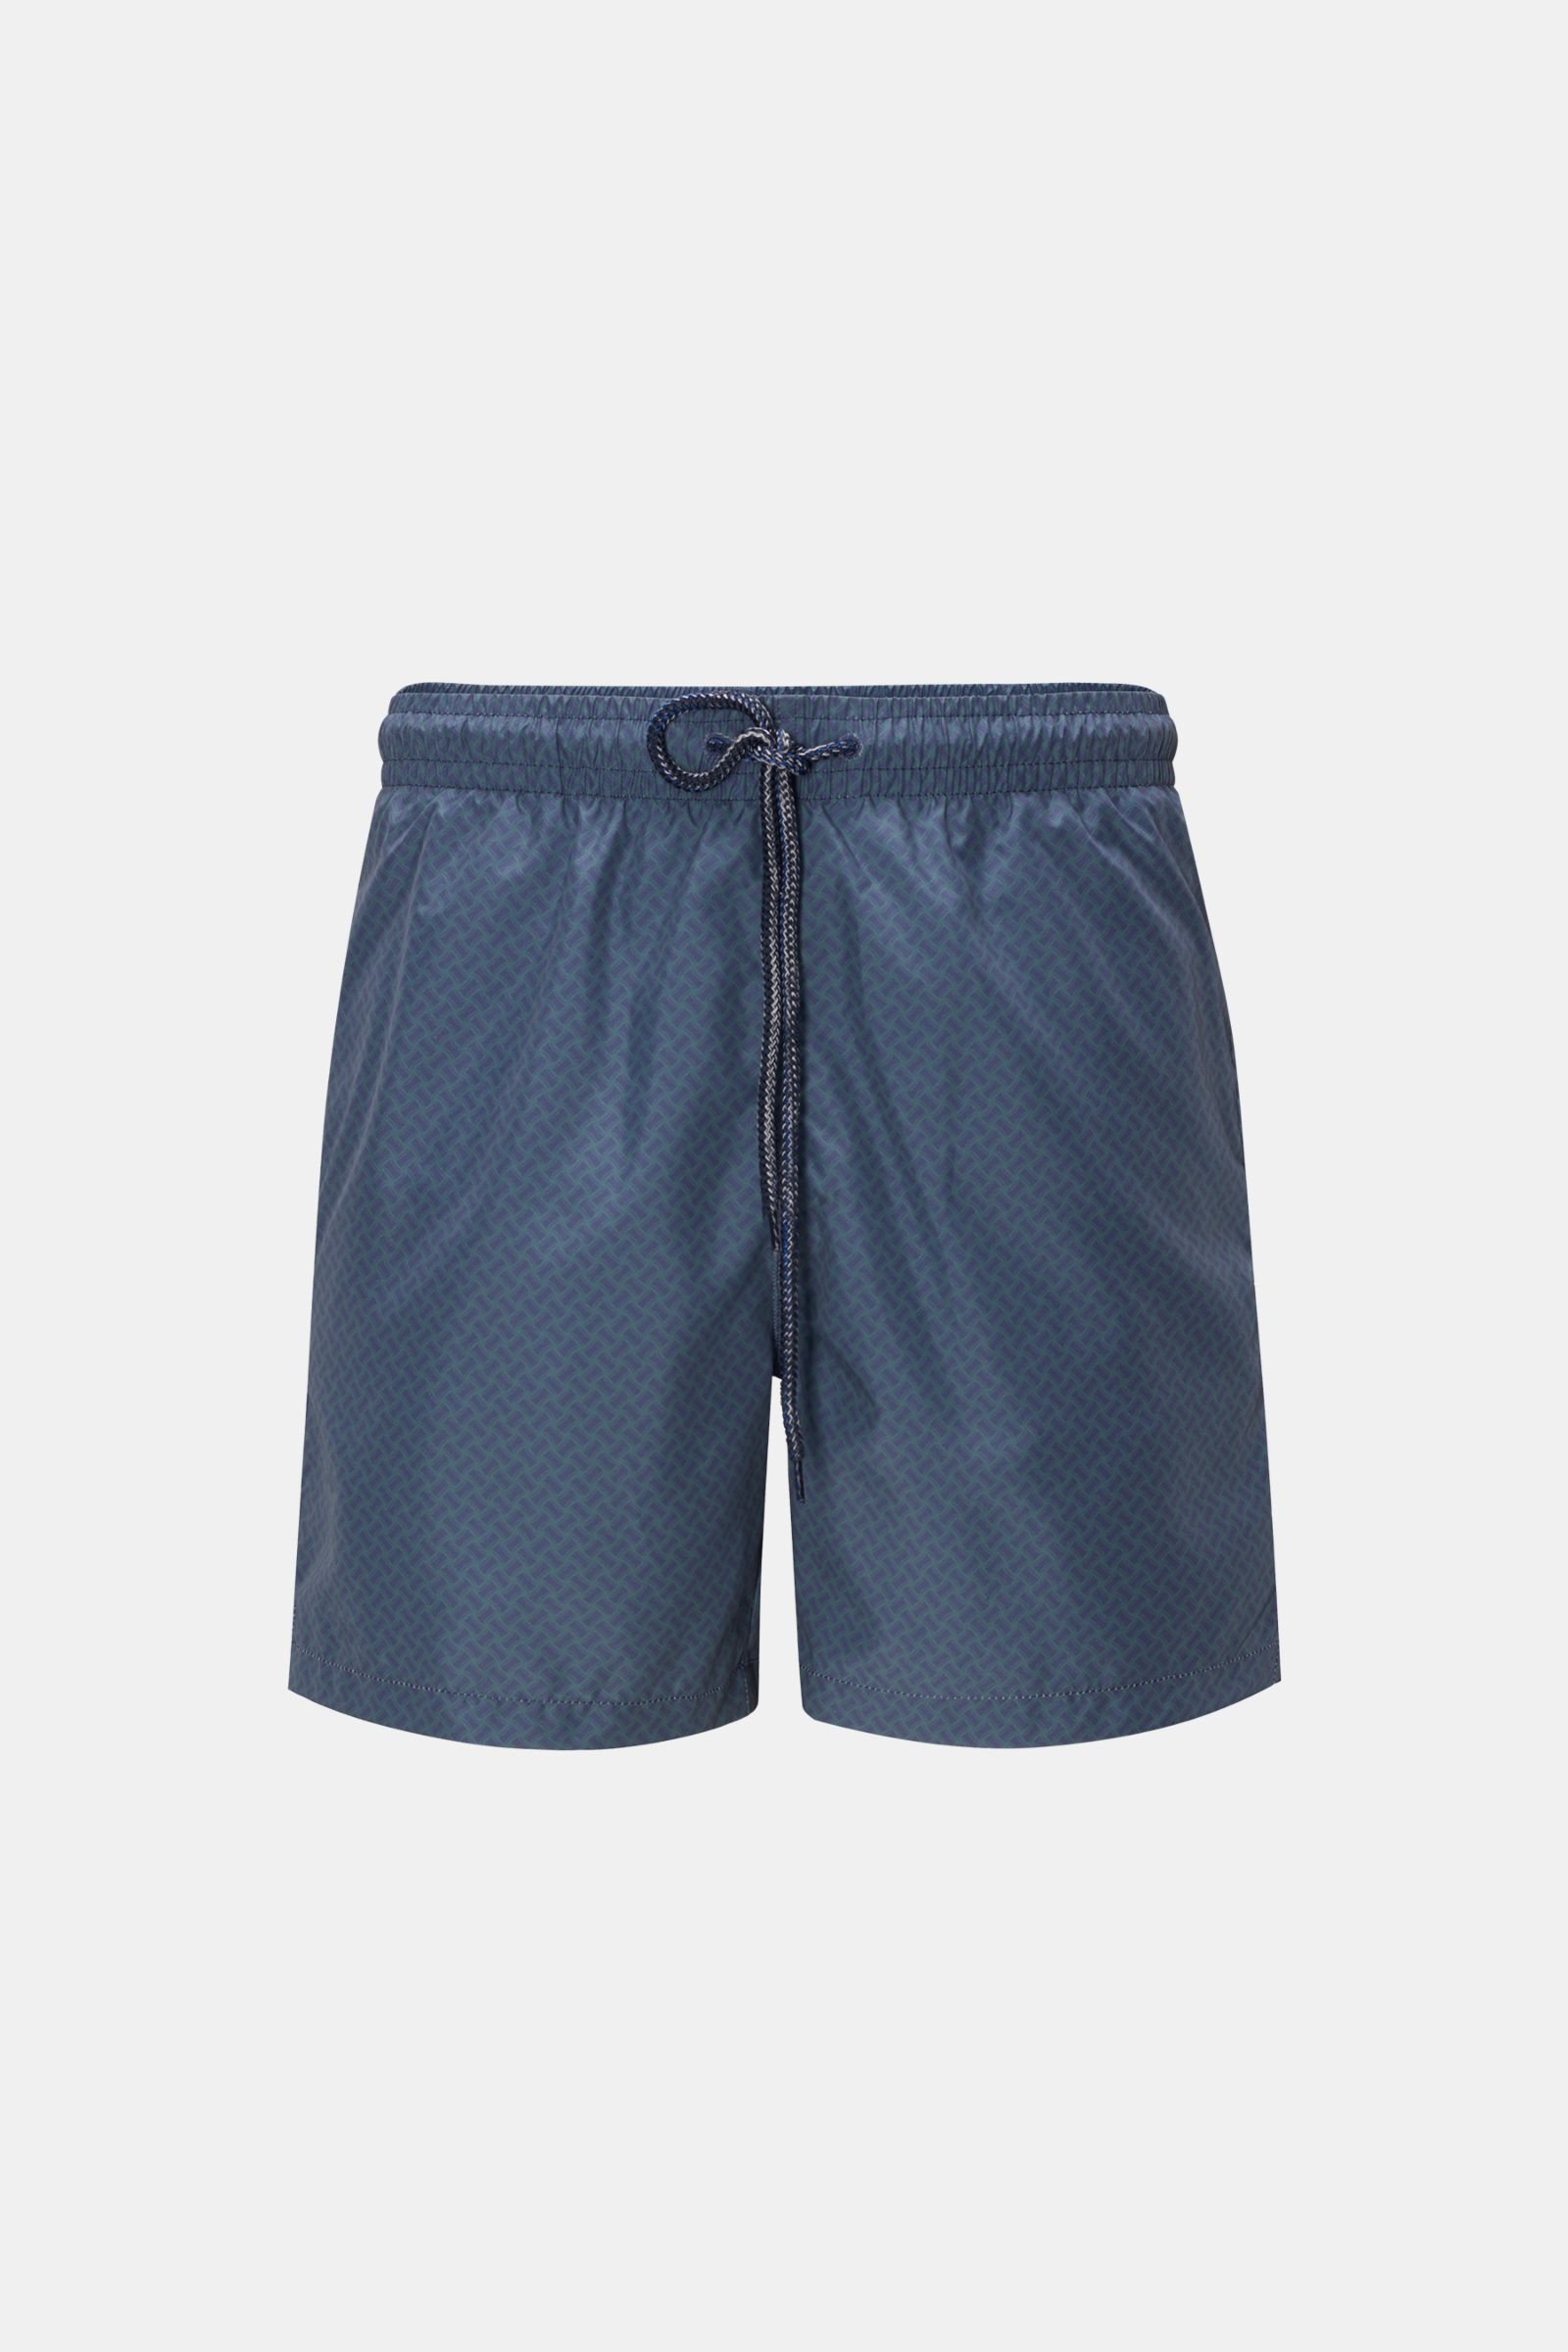 Swim shorts dark green/navy patterned 